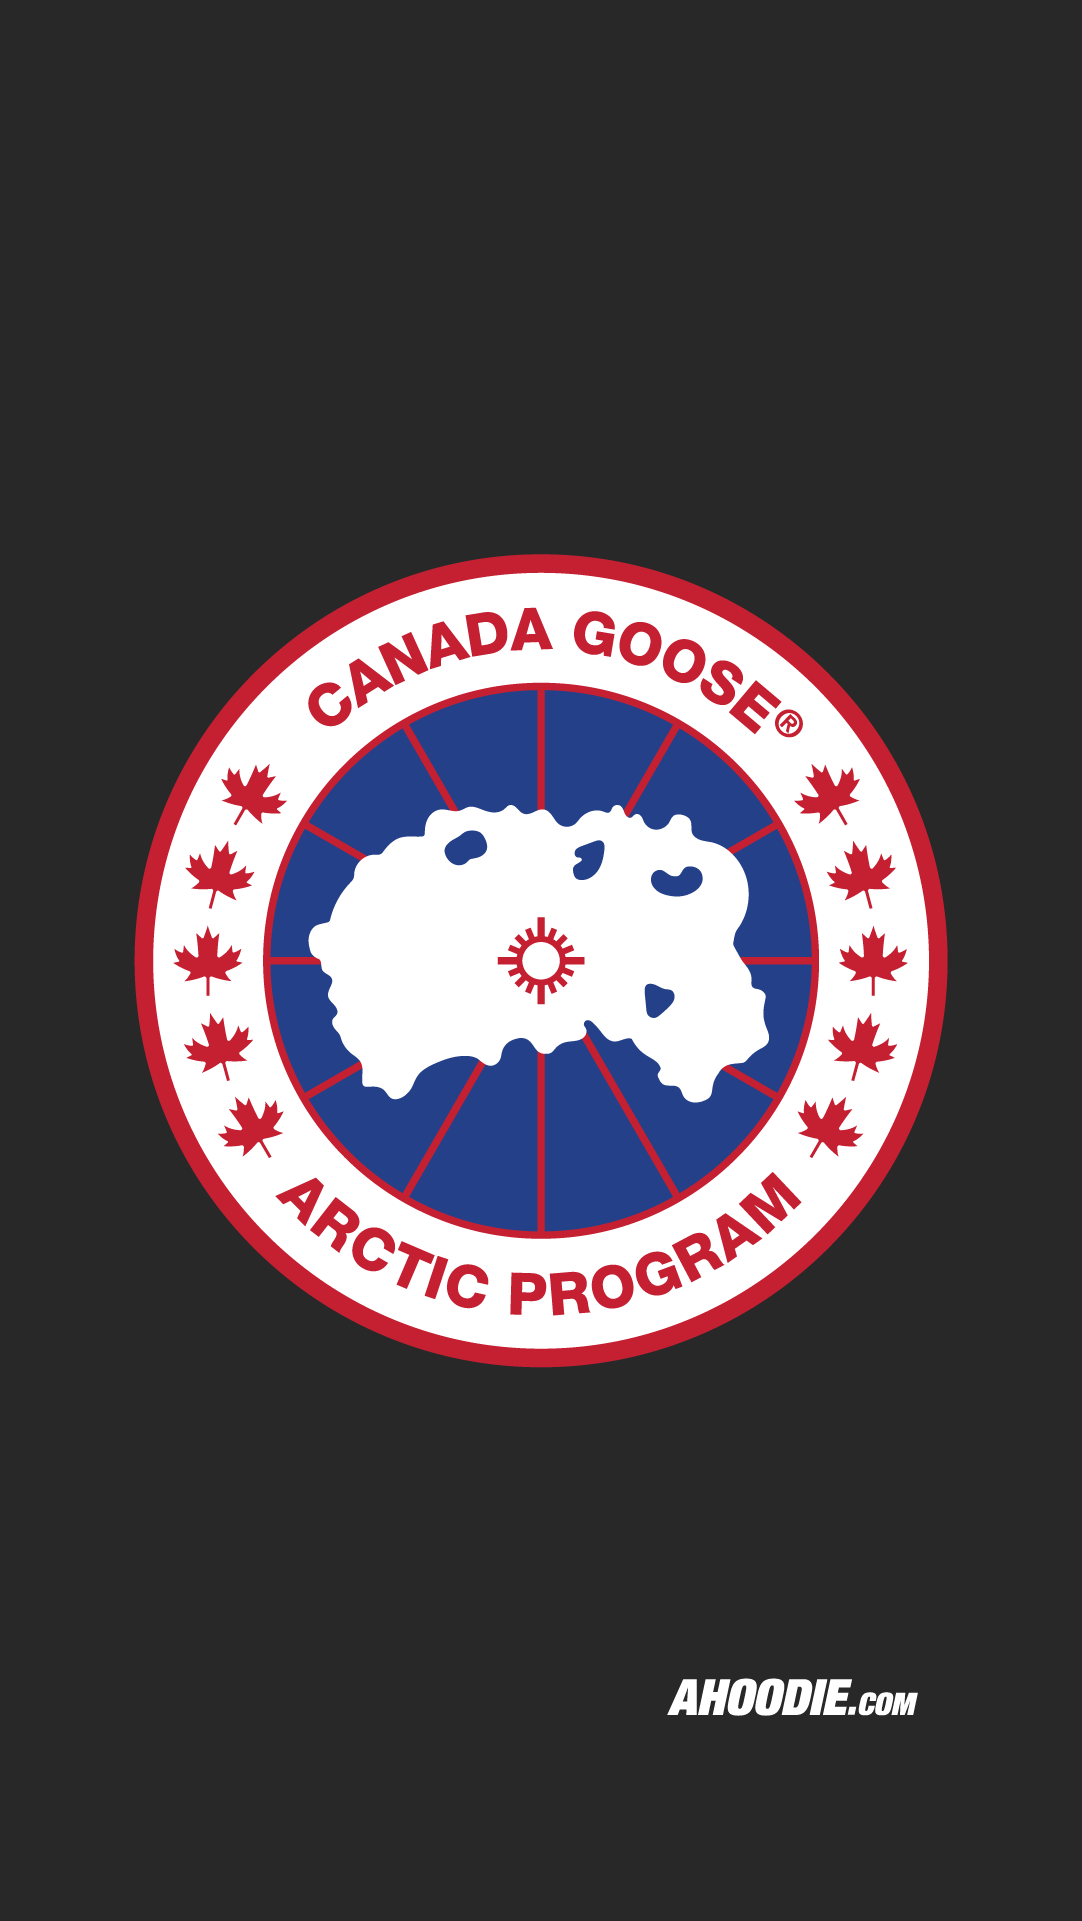 Ahoodie Logo - Ahoodie. Canada Goose logo wallpaper in charcoal